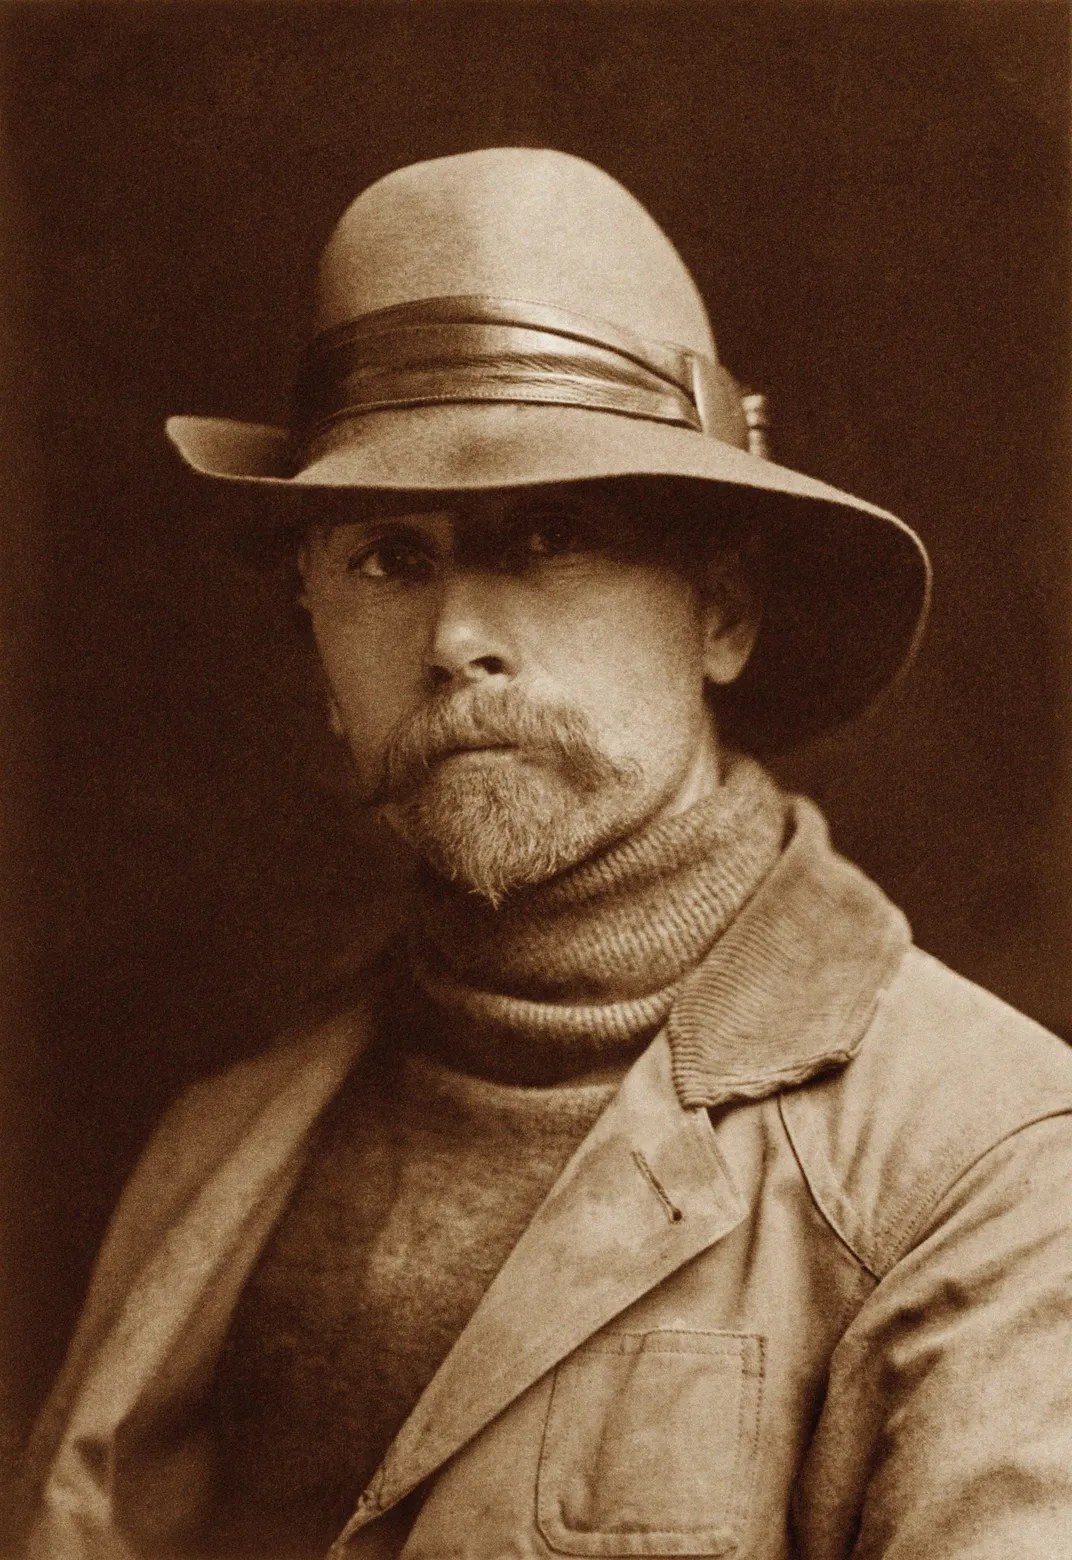 Self-portrait of Edward S. Curtis.